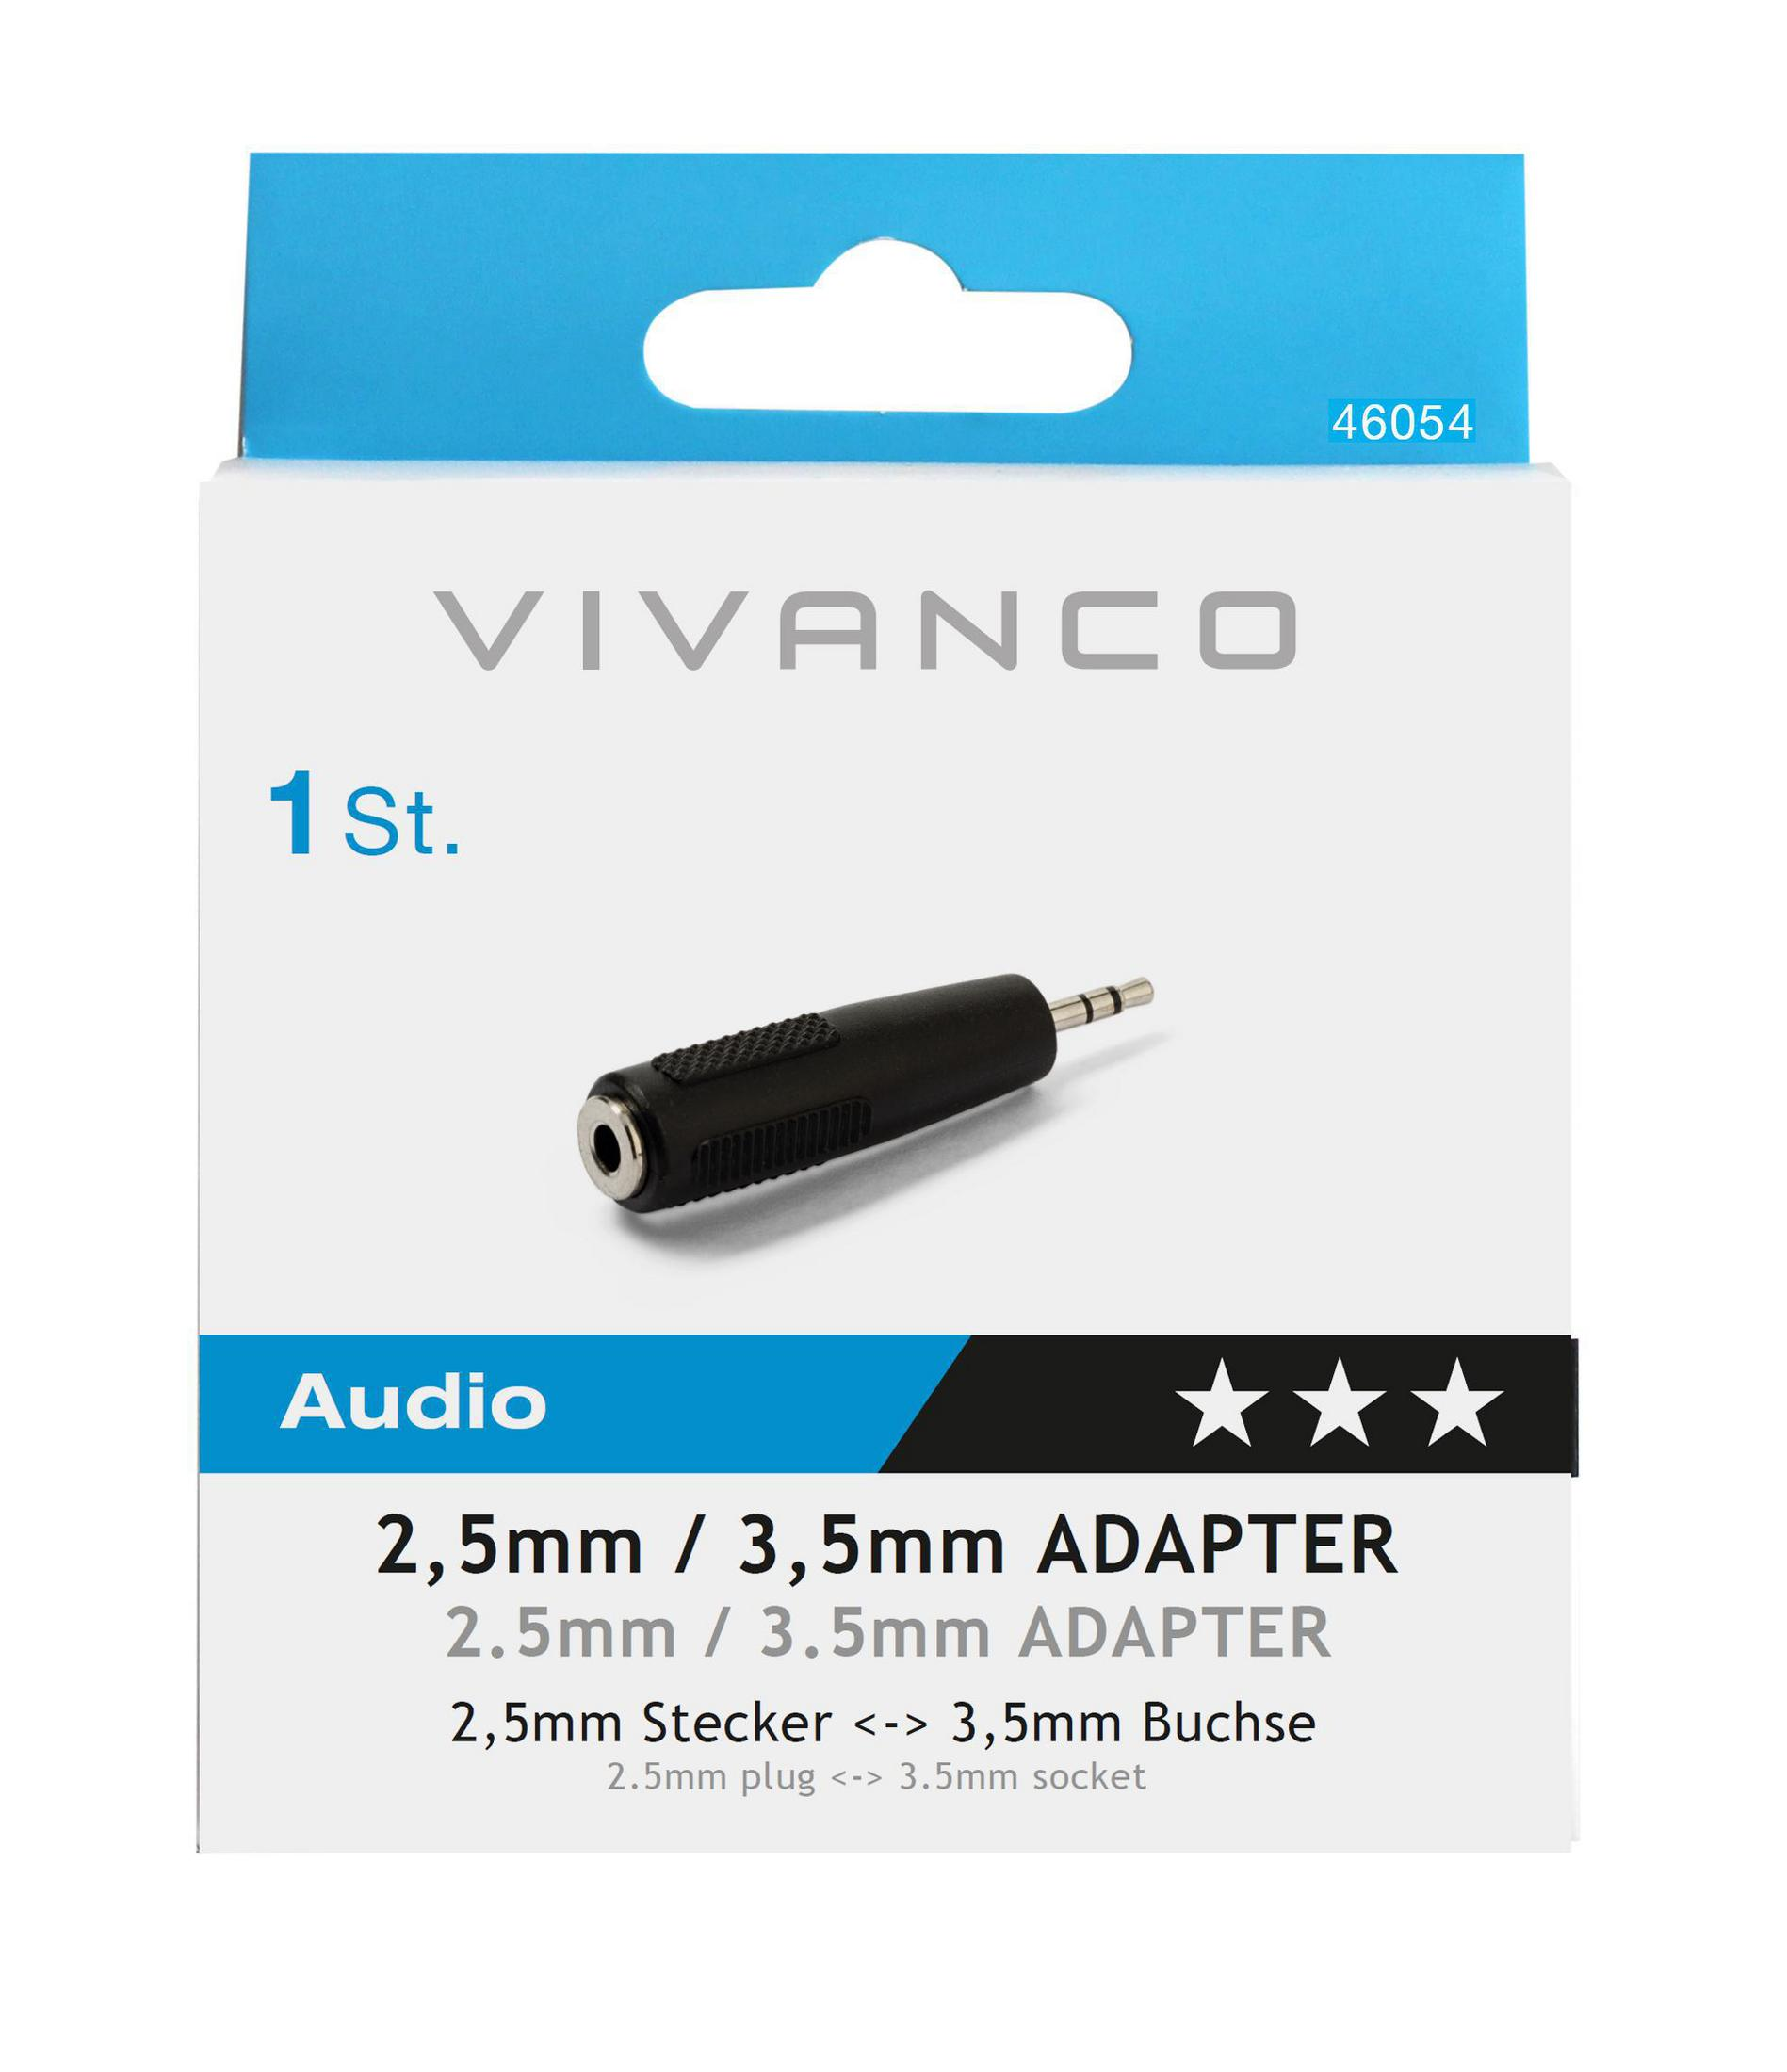 VIVANCO 46054, Audioadapter